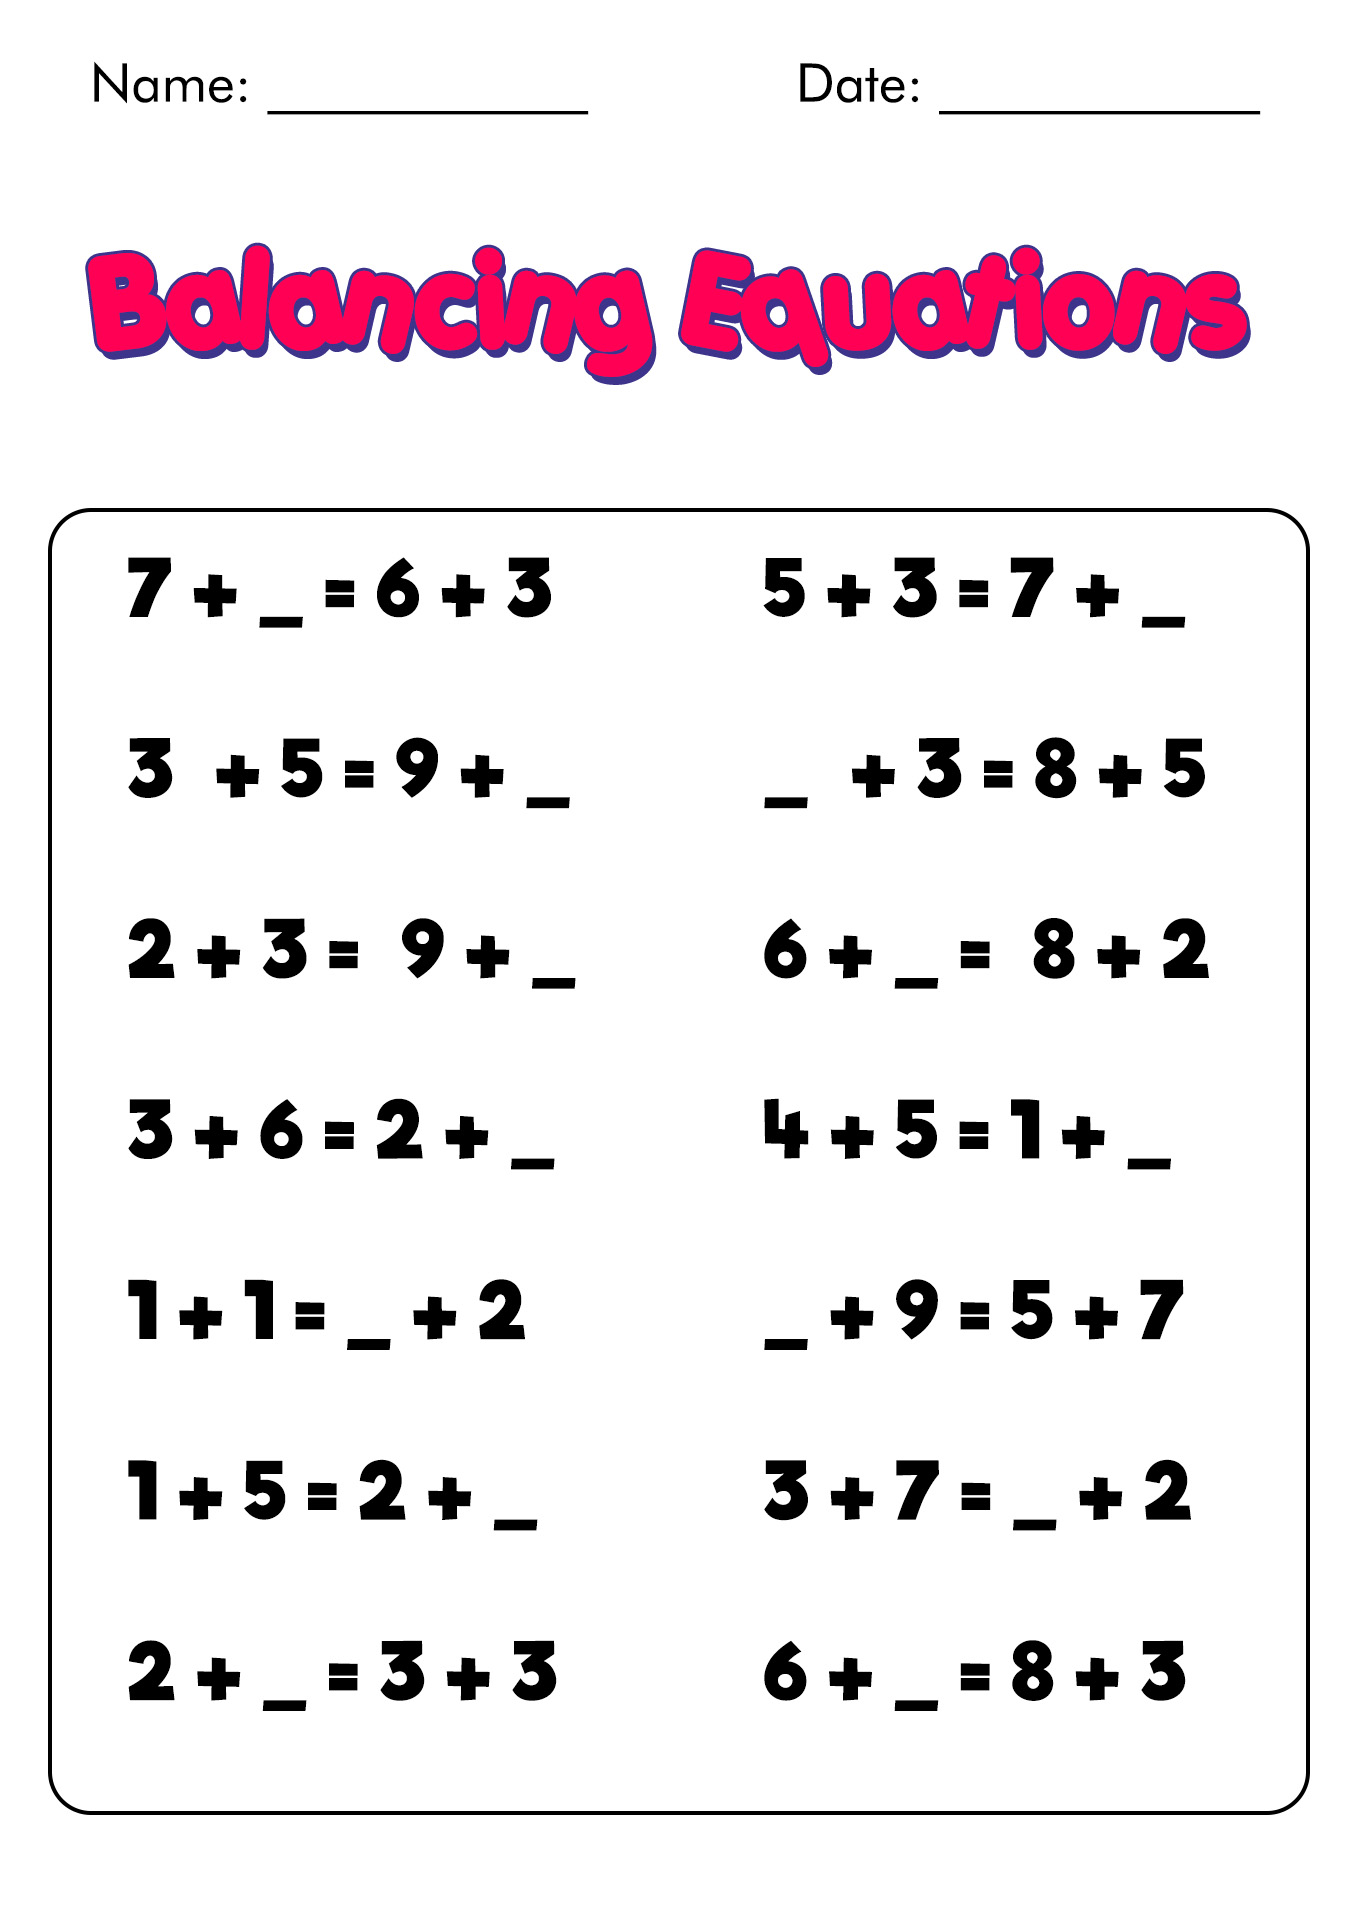 balanced-number-sentences-pdf-google-drive-math-work-math-school-math-time